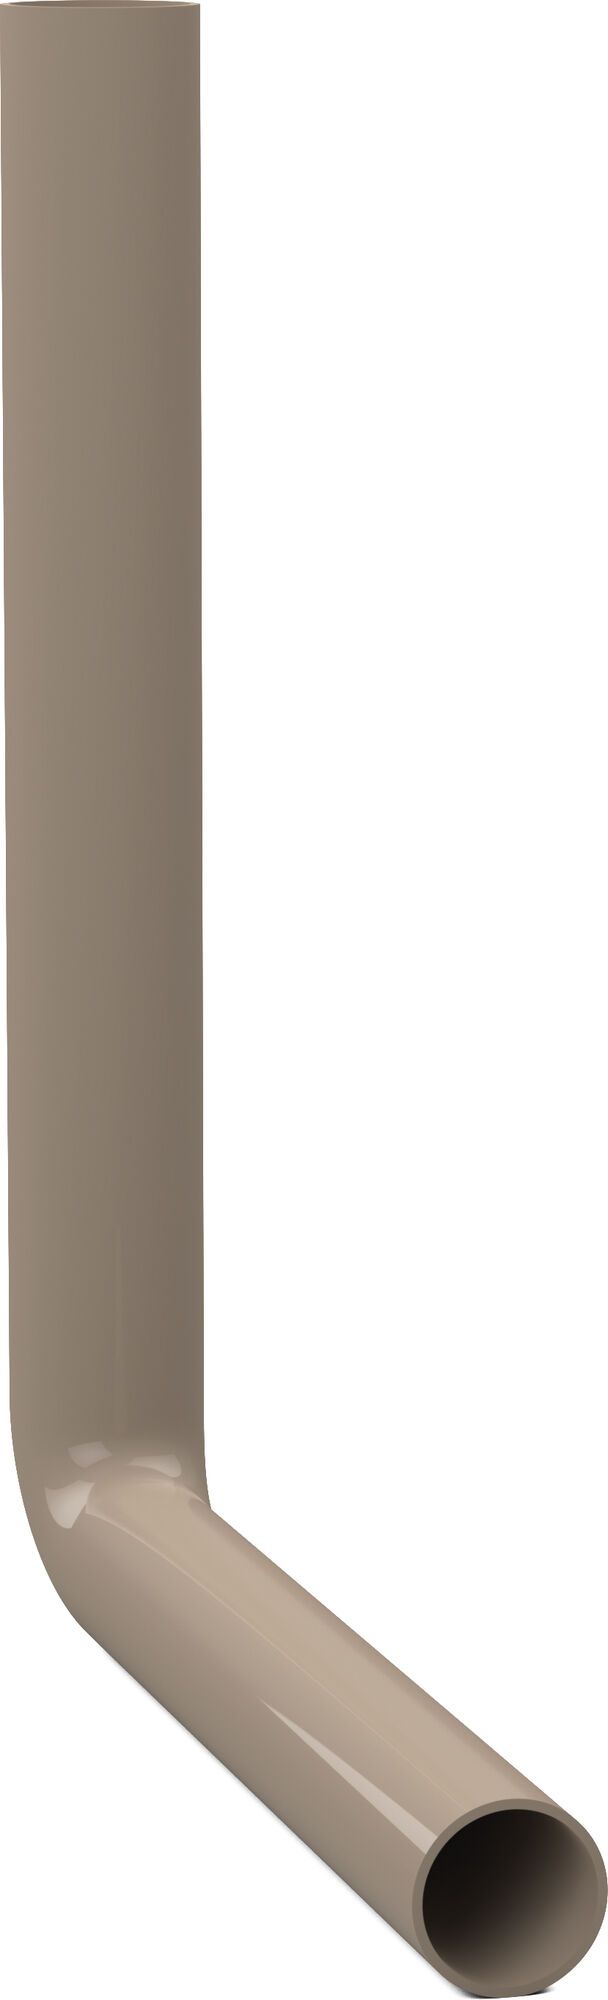 Flush pipe elbow 390 x 350 mm, beige